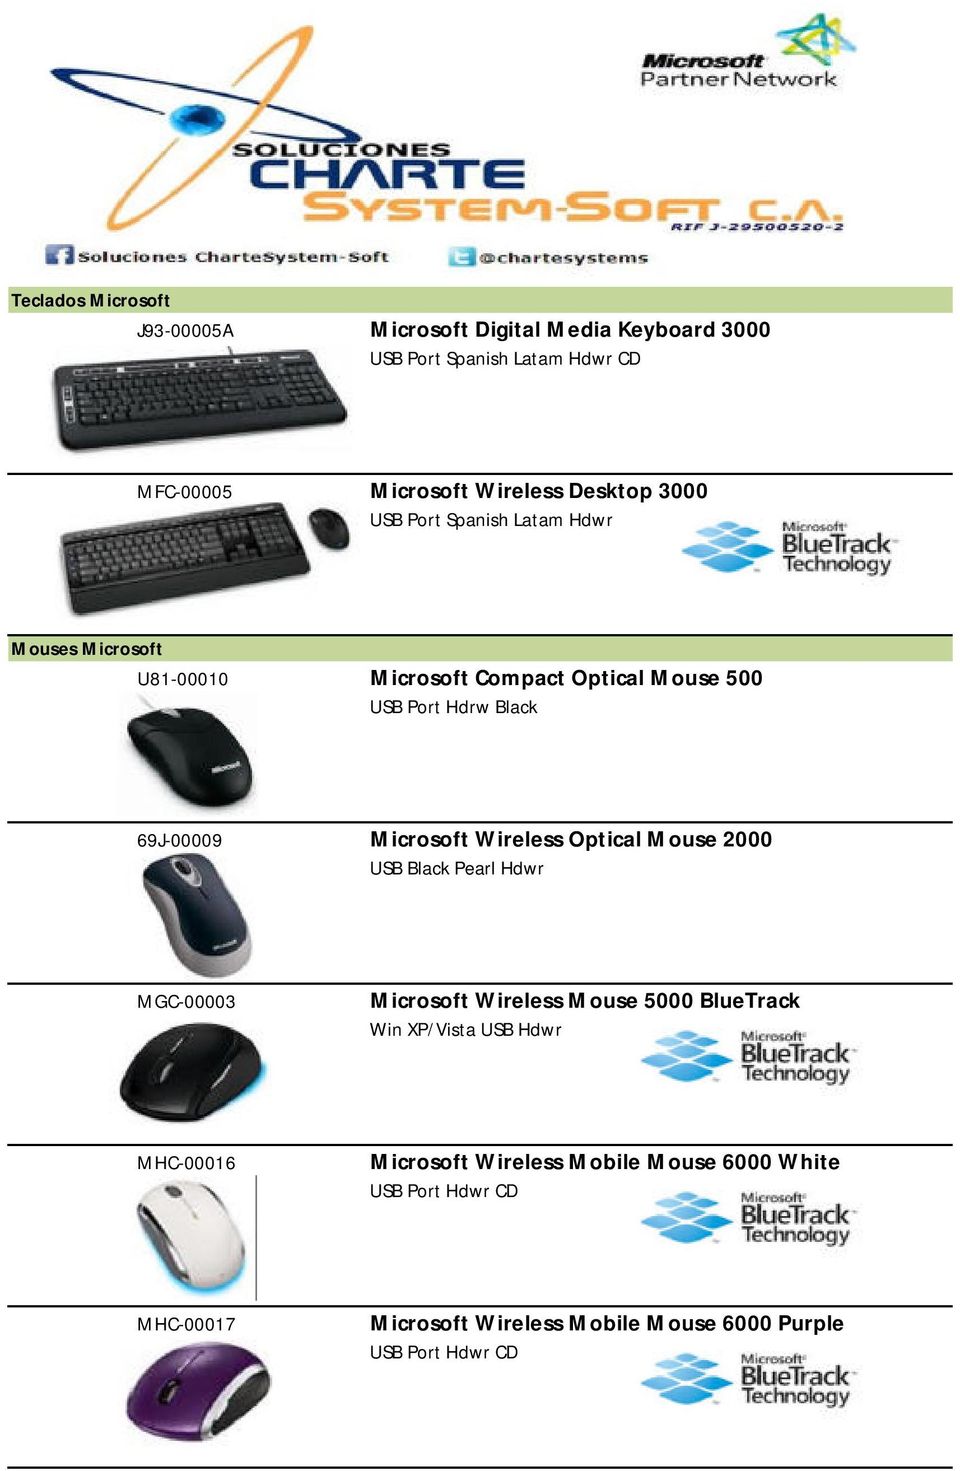 Microsoft Wireless Optical Mouse 2000 USB Black Pearl Hdwr MGC-00003 Microsoft Wireless Mouse 5000 BlueTrack Win XP/Vista USB Hdwr